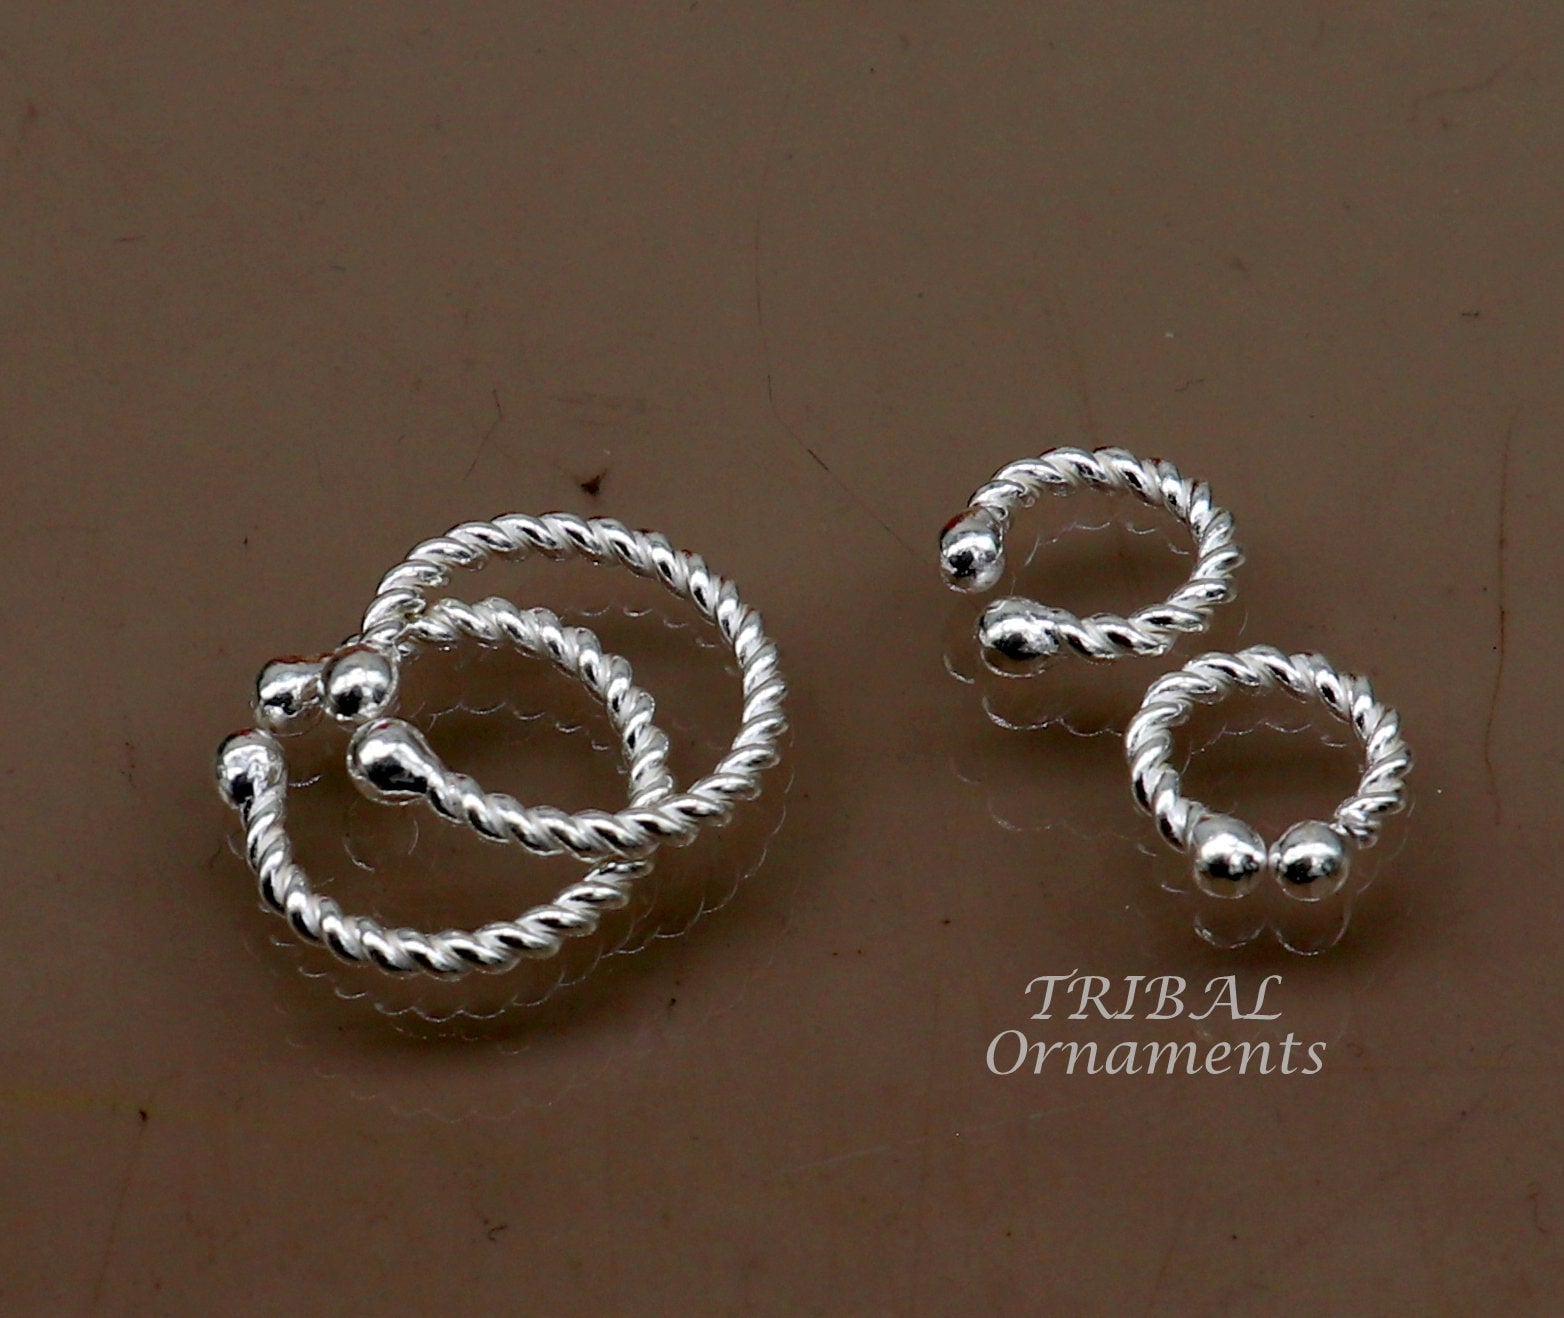 Baby krishna jewelry set of cuff kada and ankle kada , small size Lord Krishna Laddu Gopala wrist and foot jewelry set best gifting nsk545 - TRIBAL ORNAMENTS